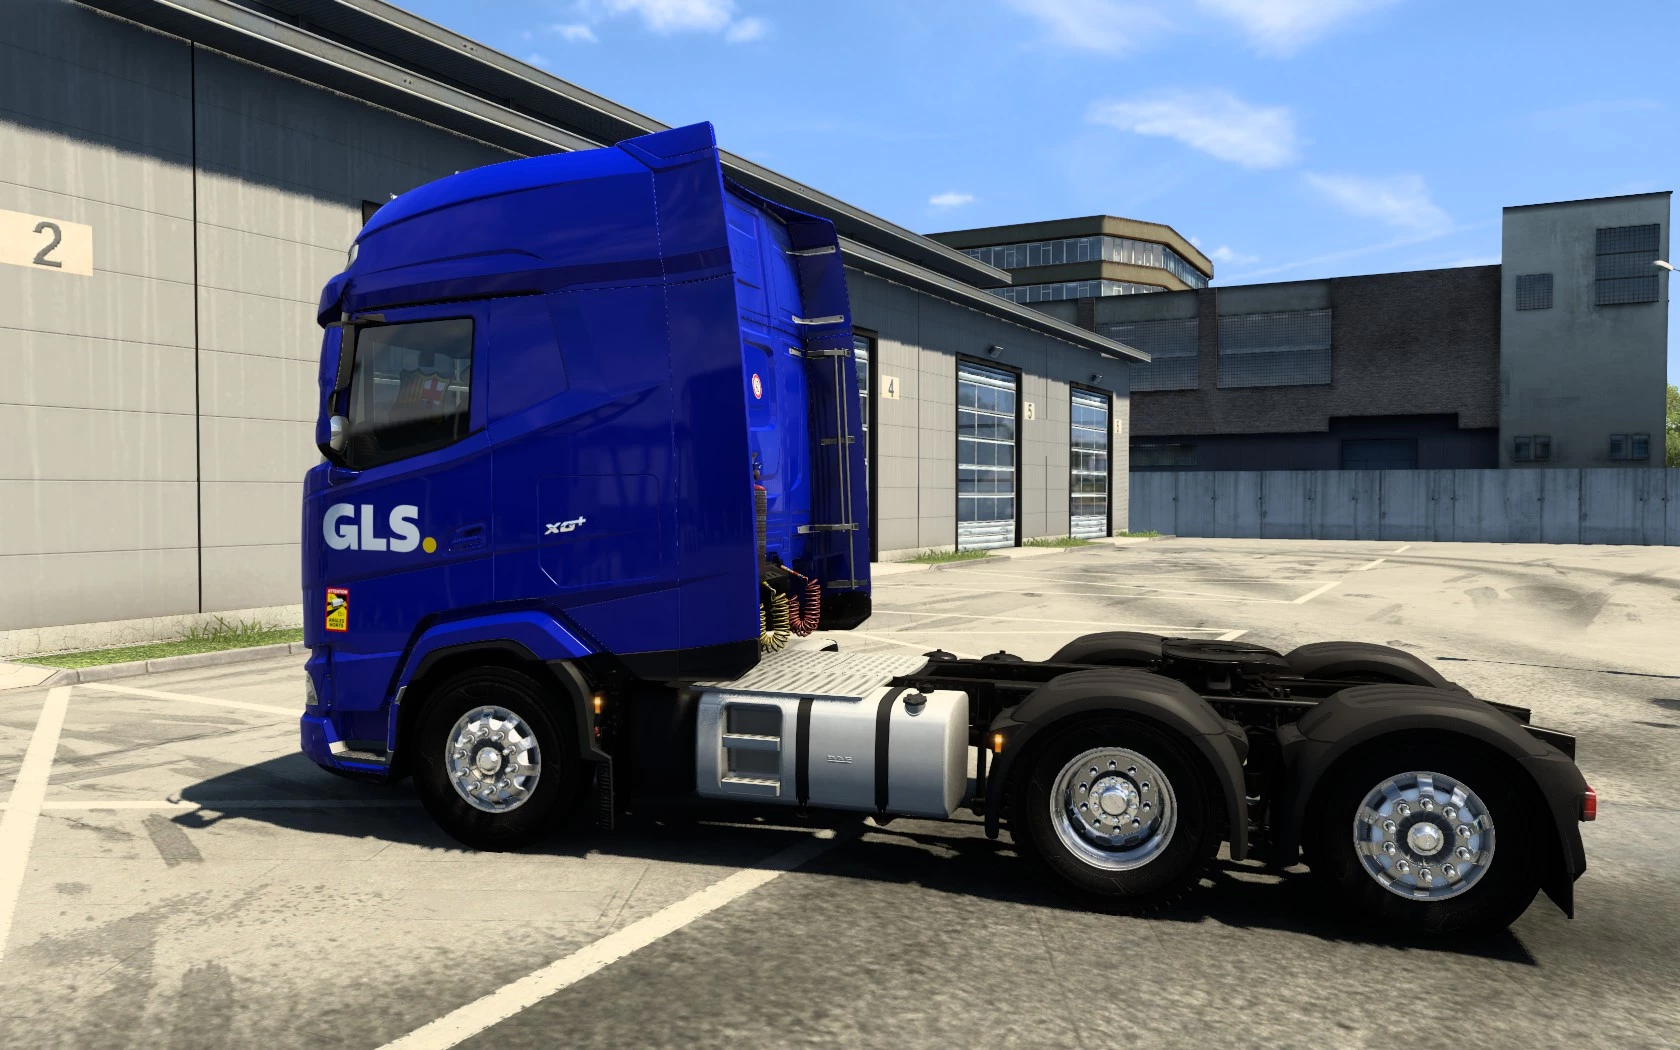 Euro truck simulator - CONJUNTO RODOJUNIOR 